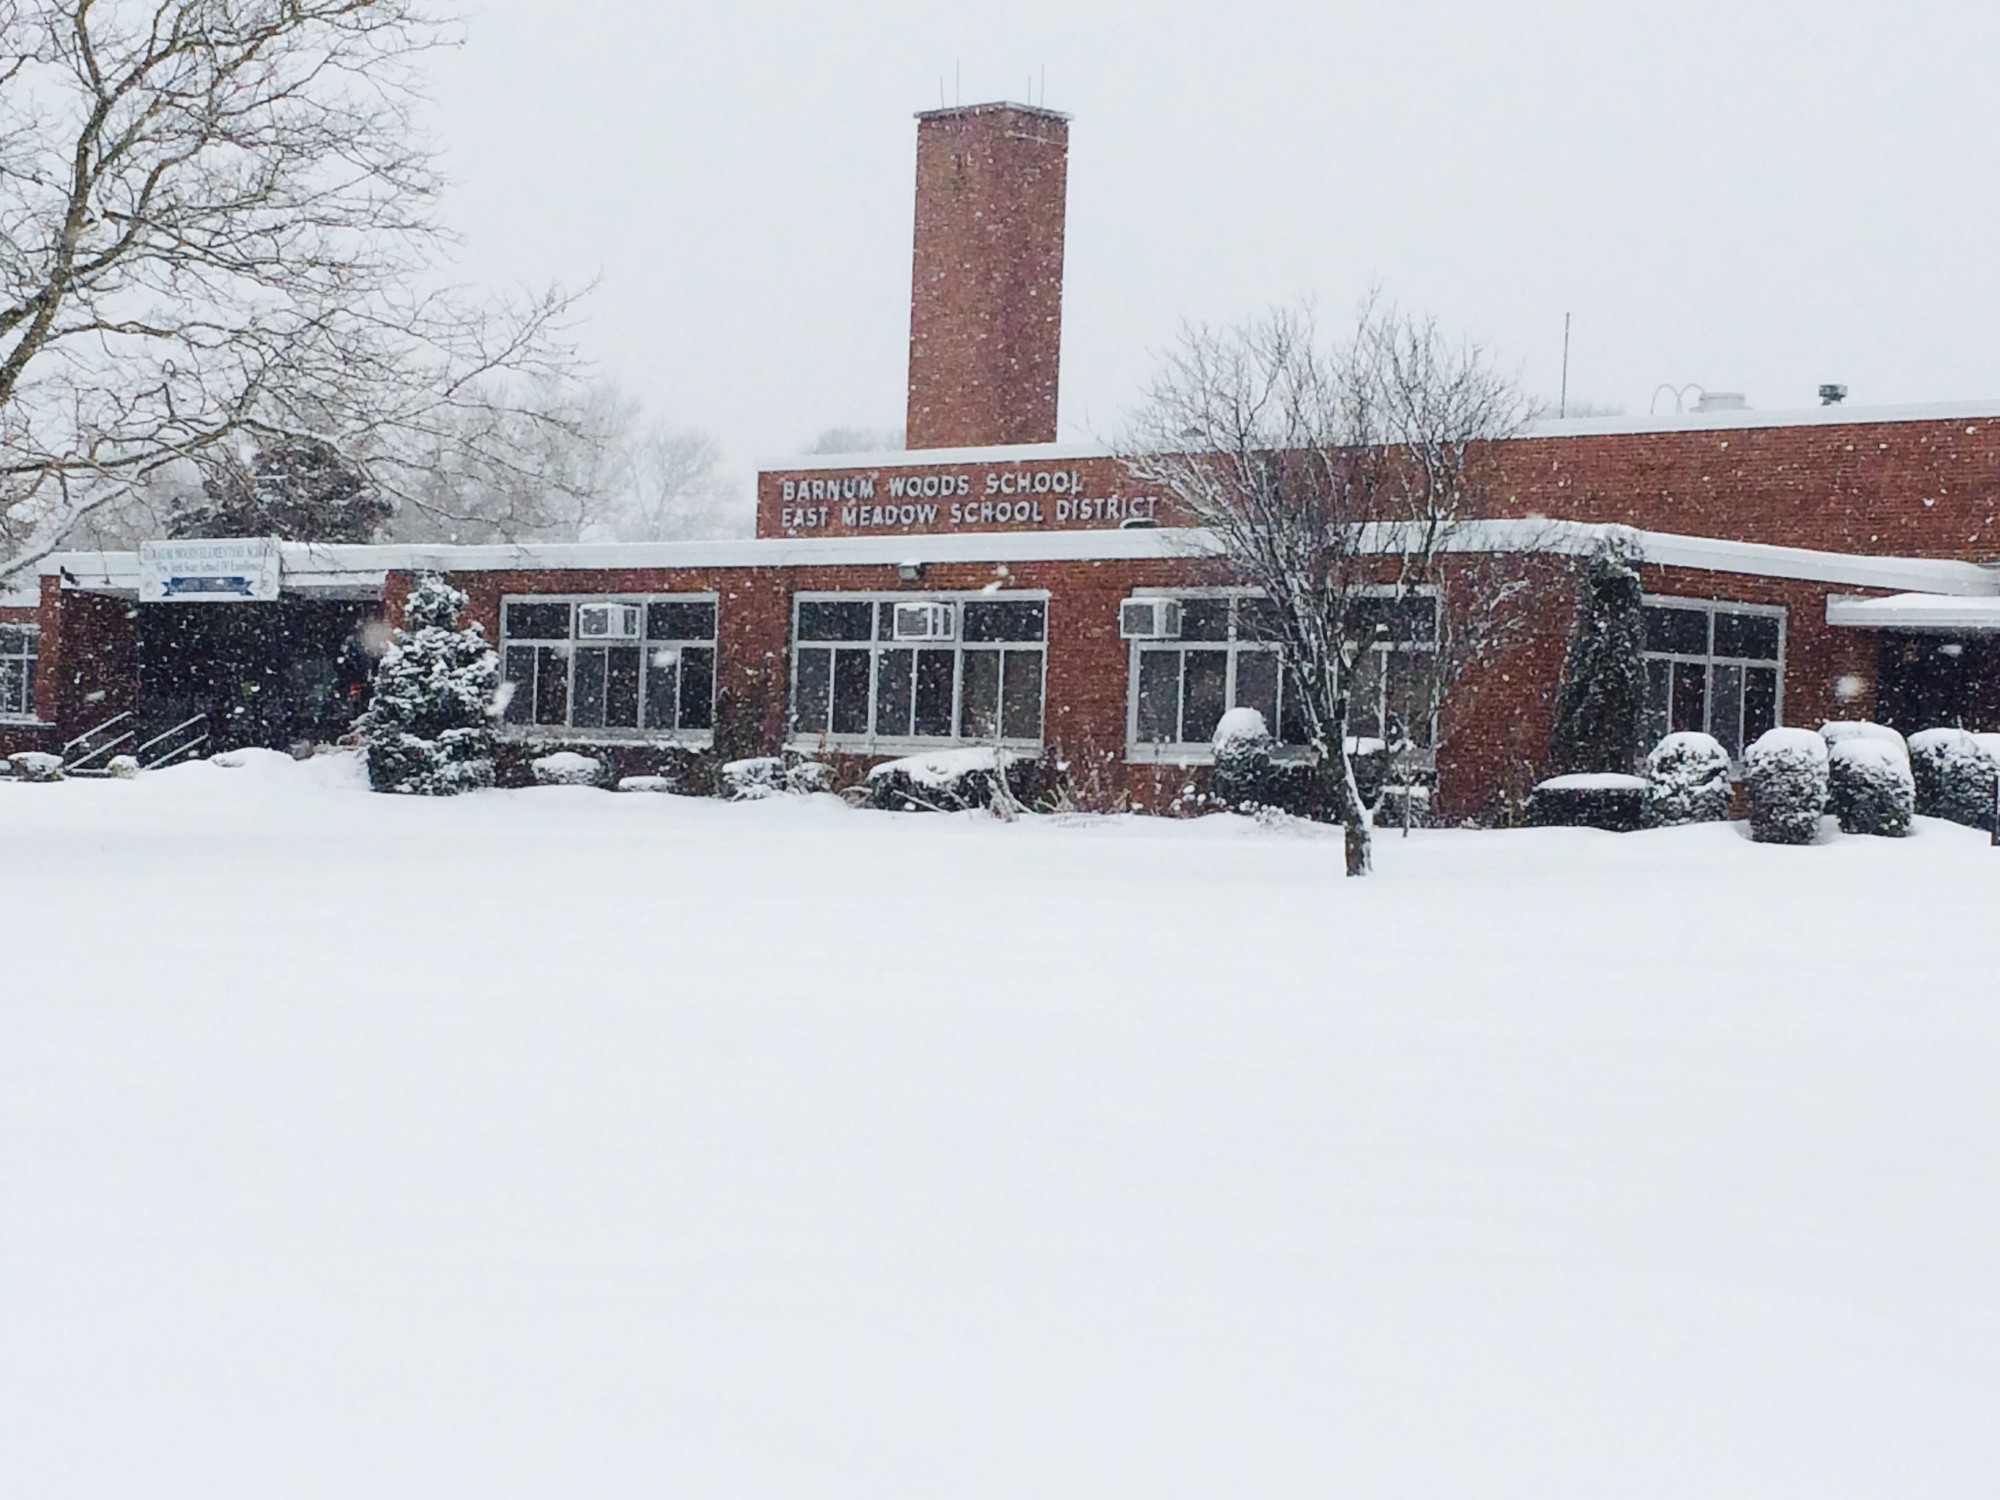 Barnum Woods Elementary School, like all schools in East Meadow, was closed on Thursday.